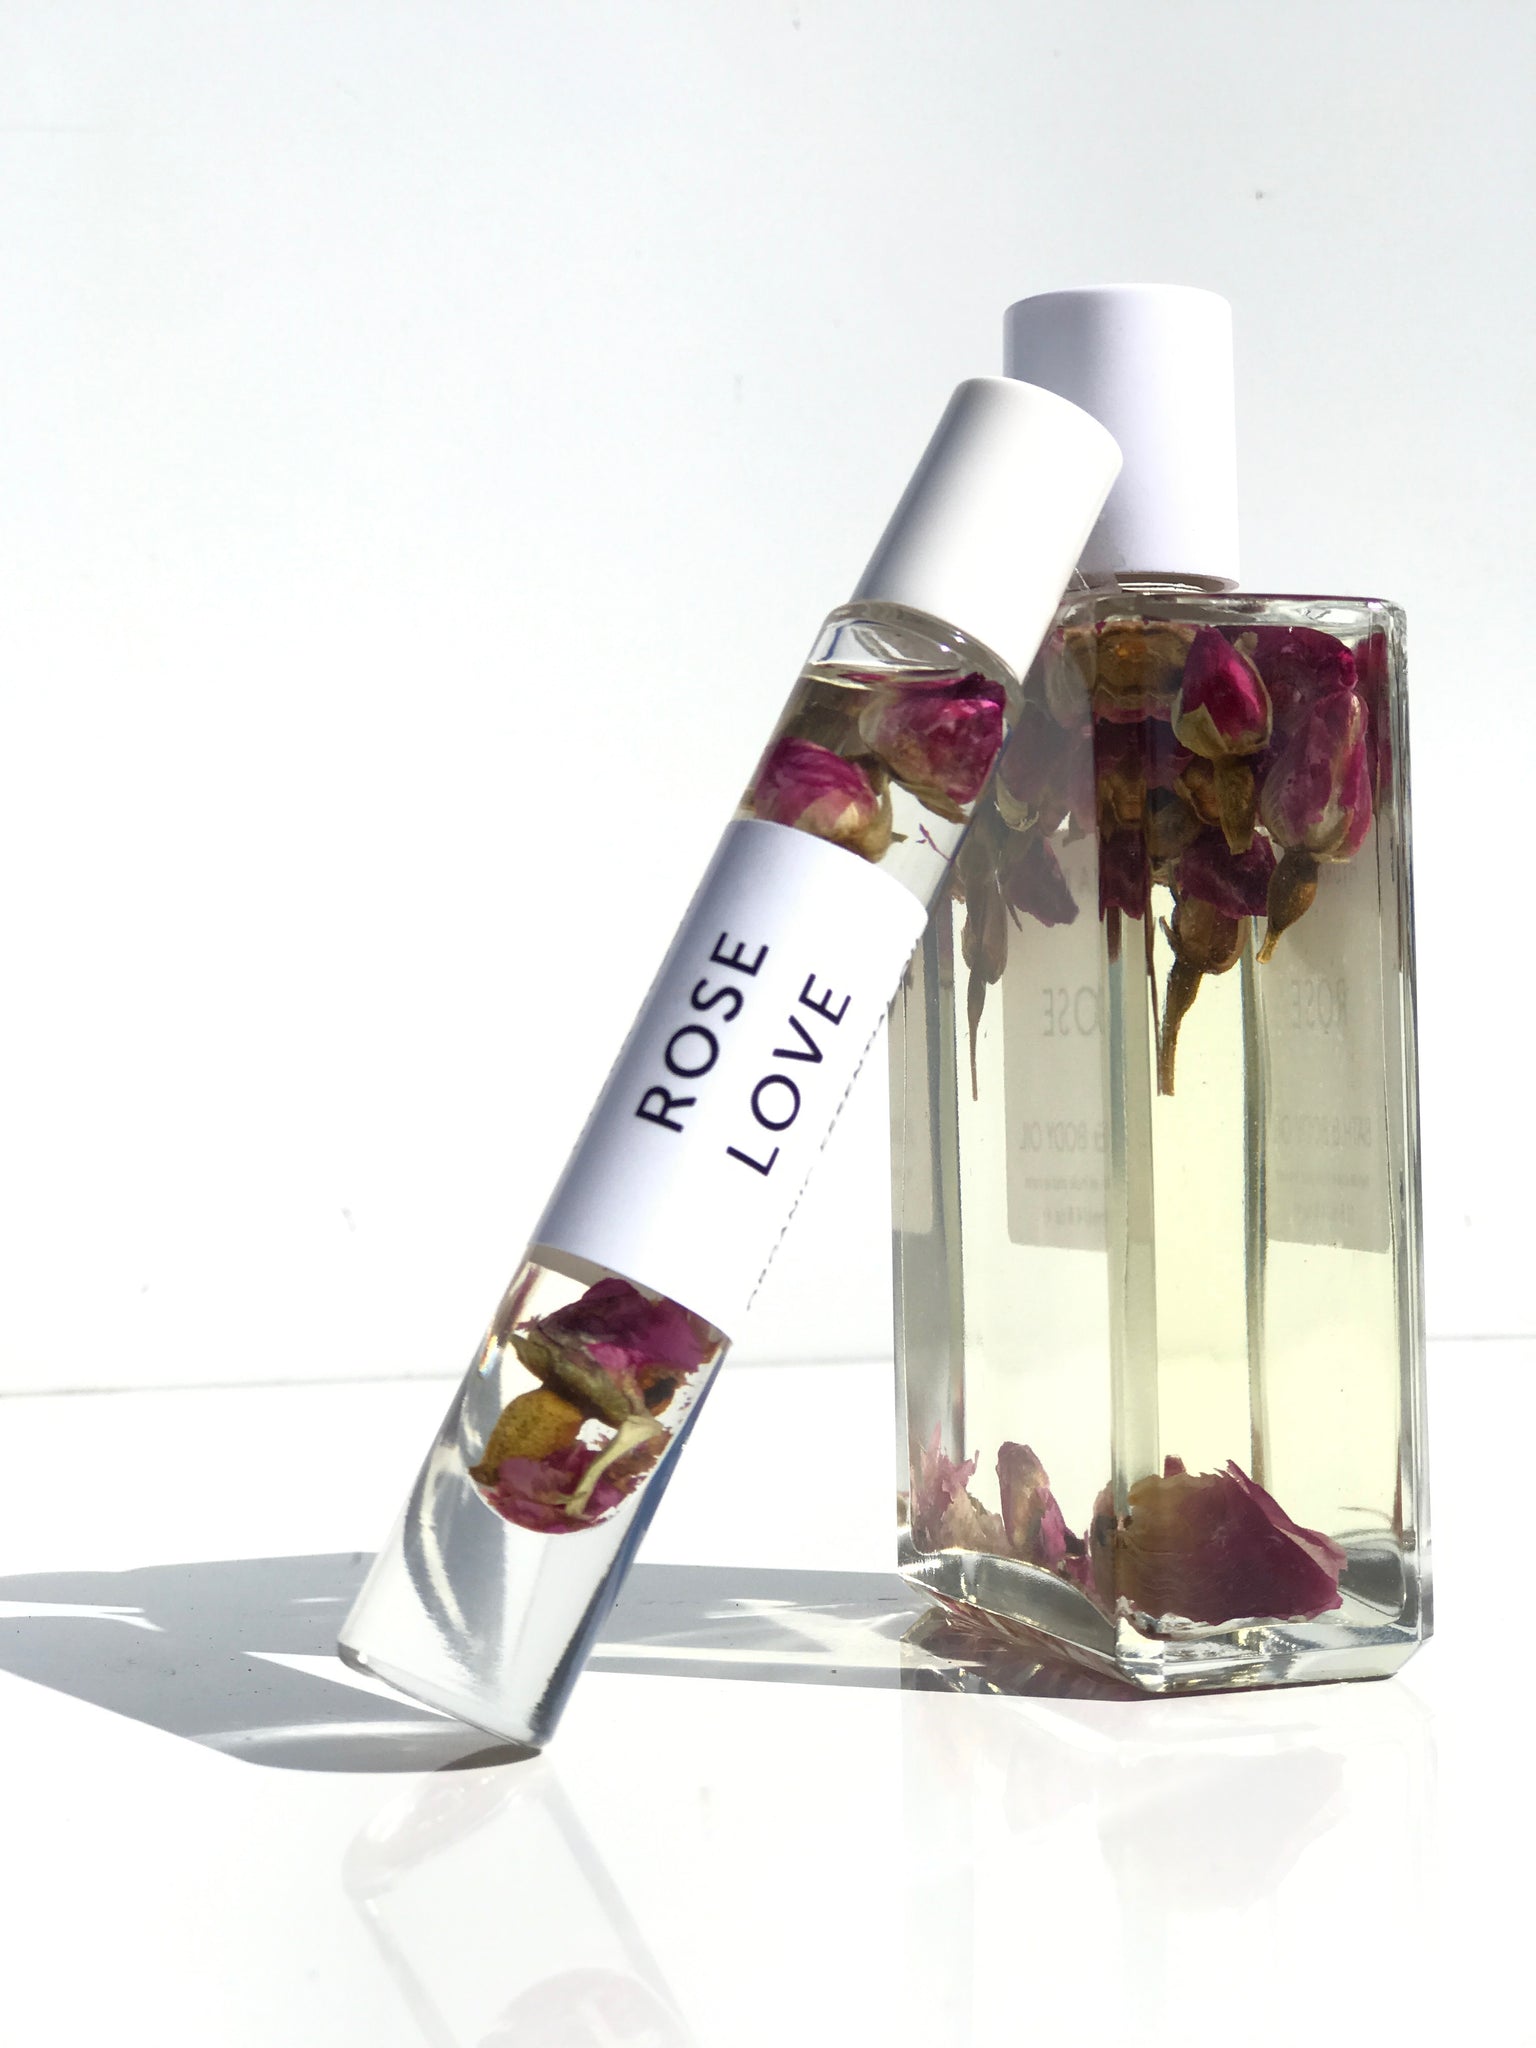 Rose Love Organic Perfume Roll-on  Hydra Bloom – Hydra Bloom Beauty USA